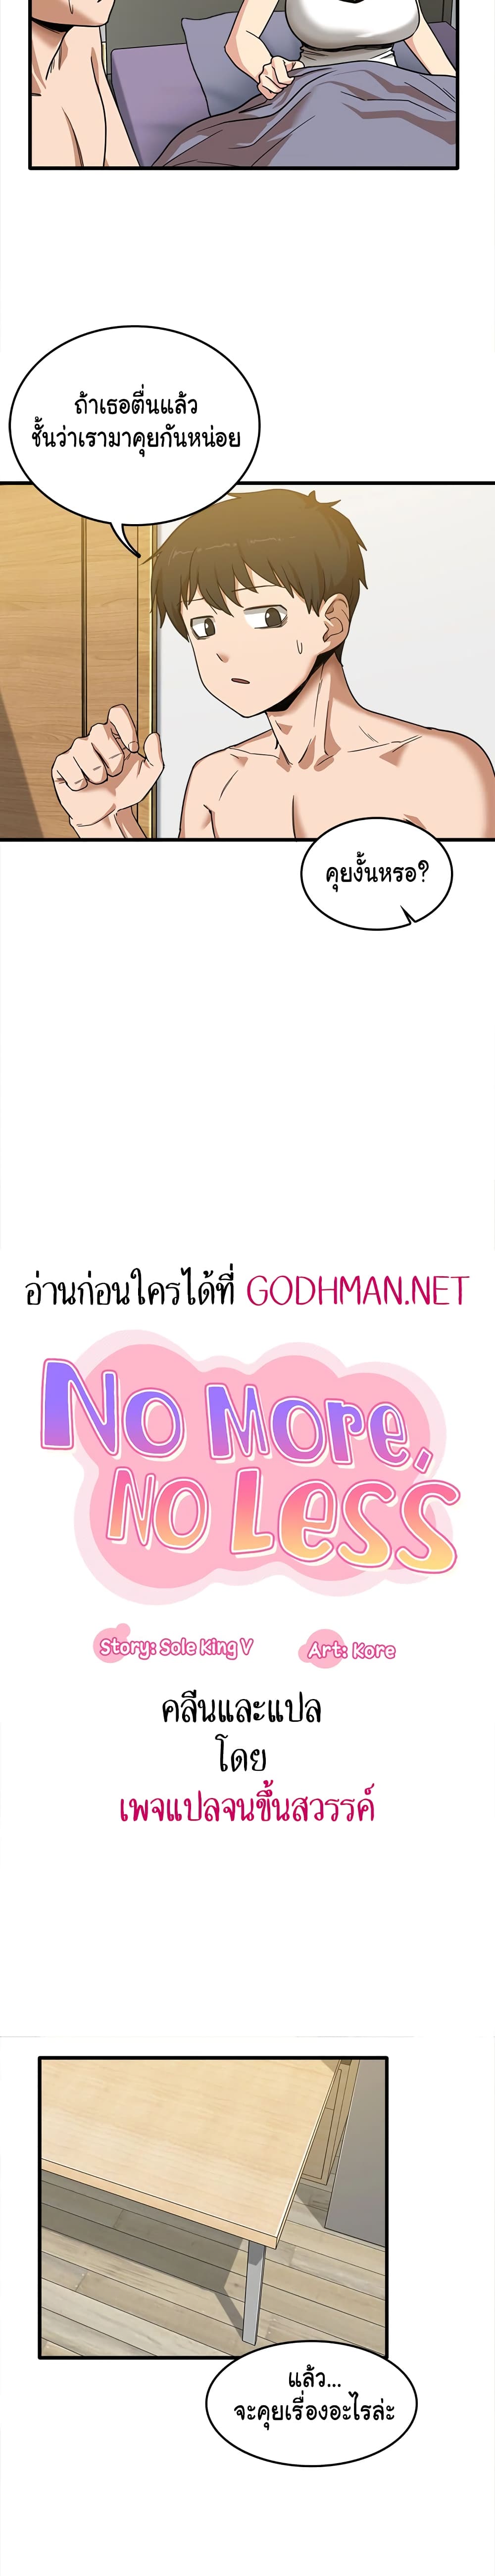 No More, No Less 2 03